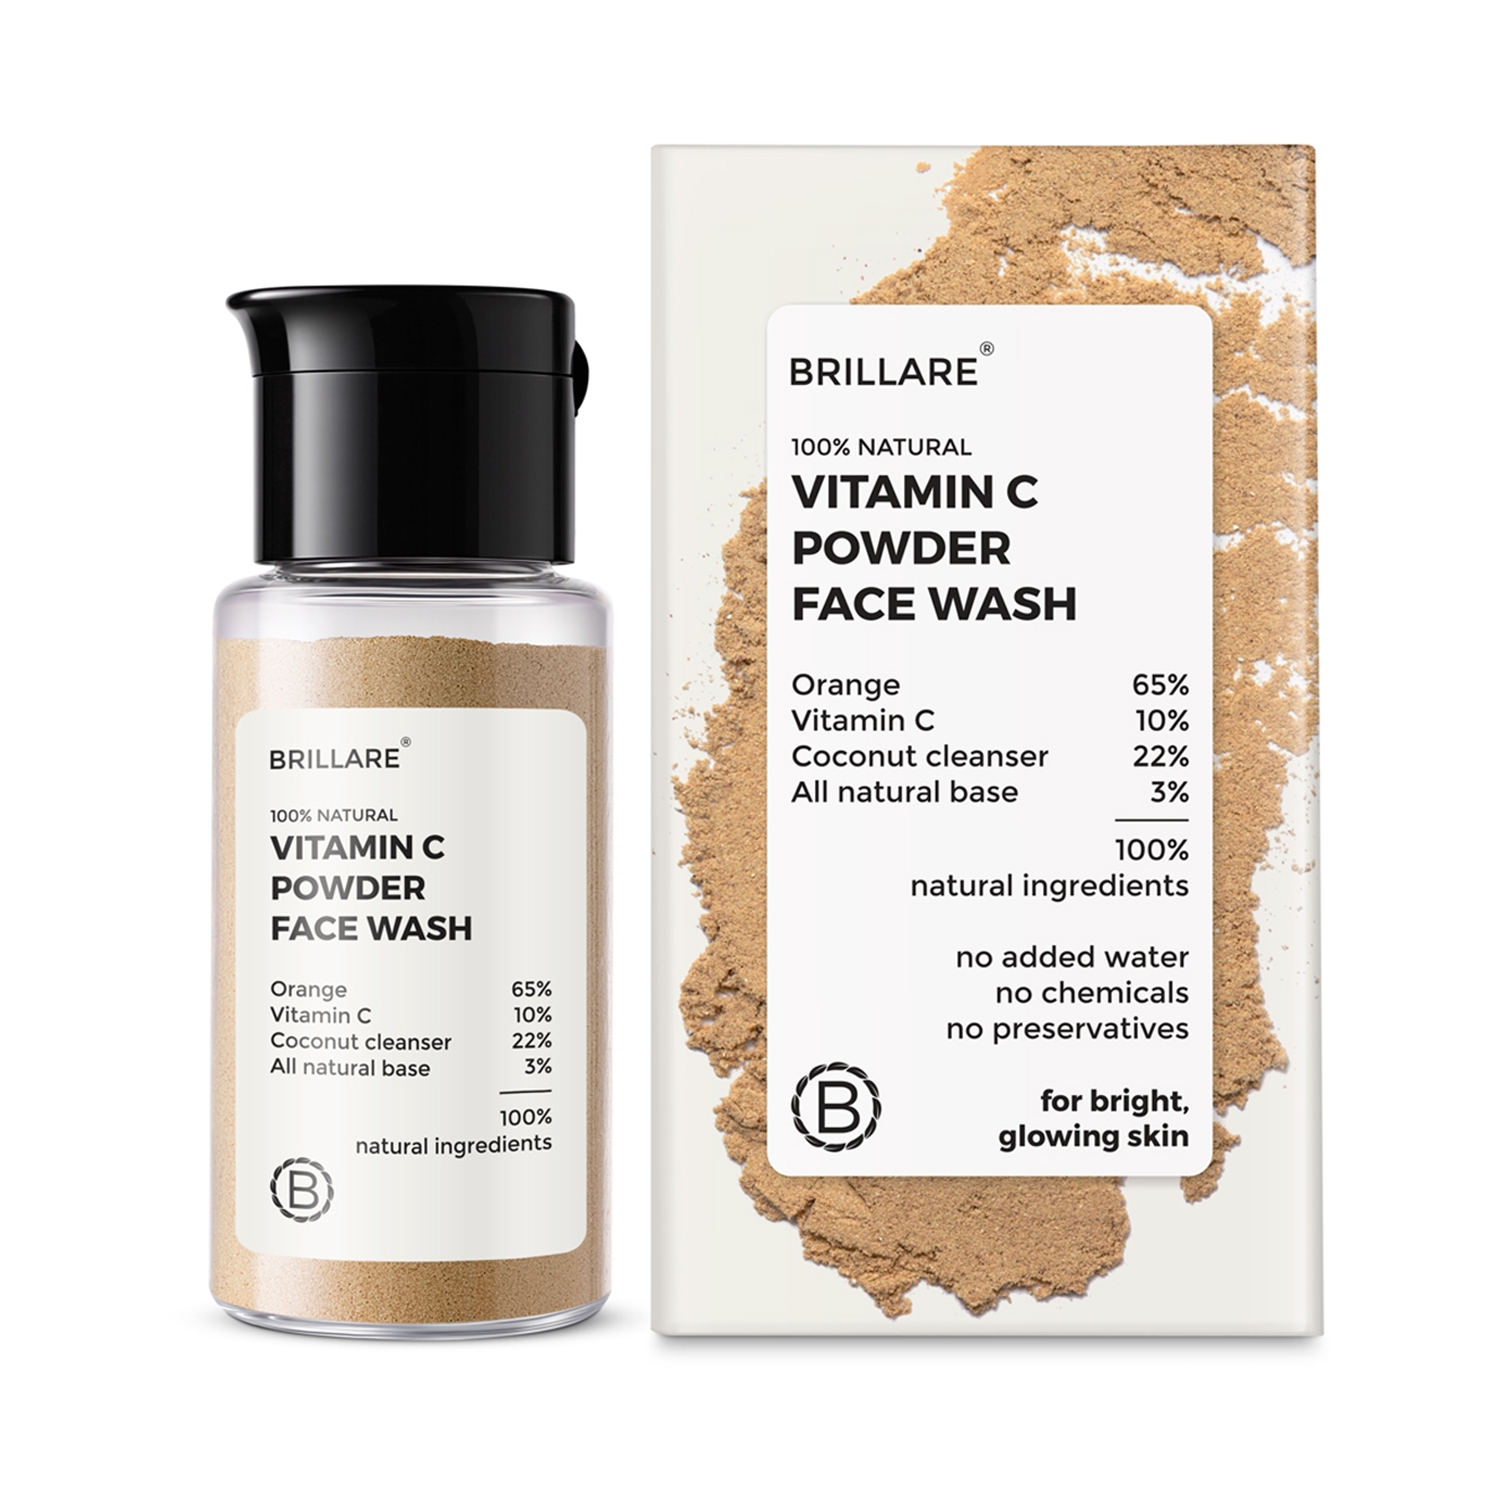 Brillare | Brillare Vitamin C Powder Face Wash For Glowing, Bright Looking Skin (15g)